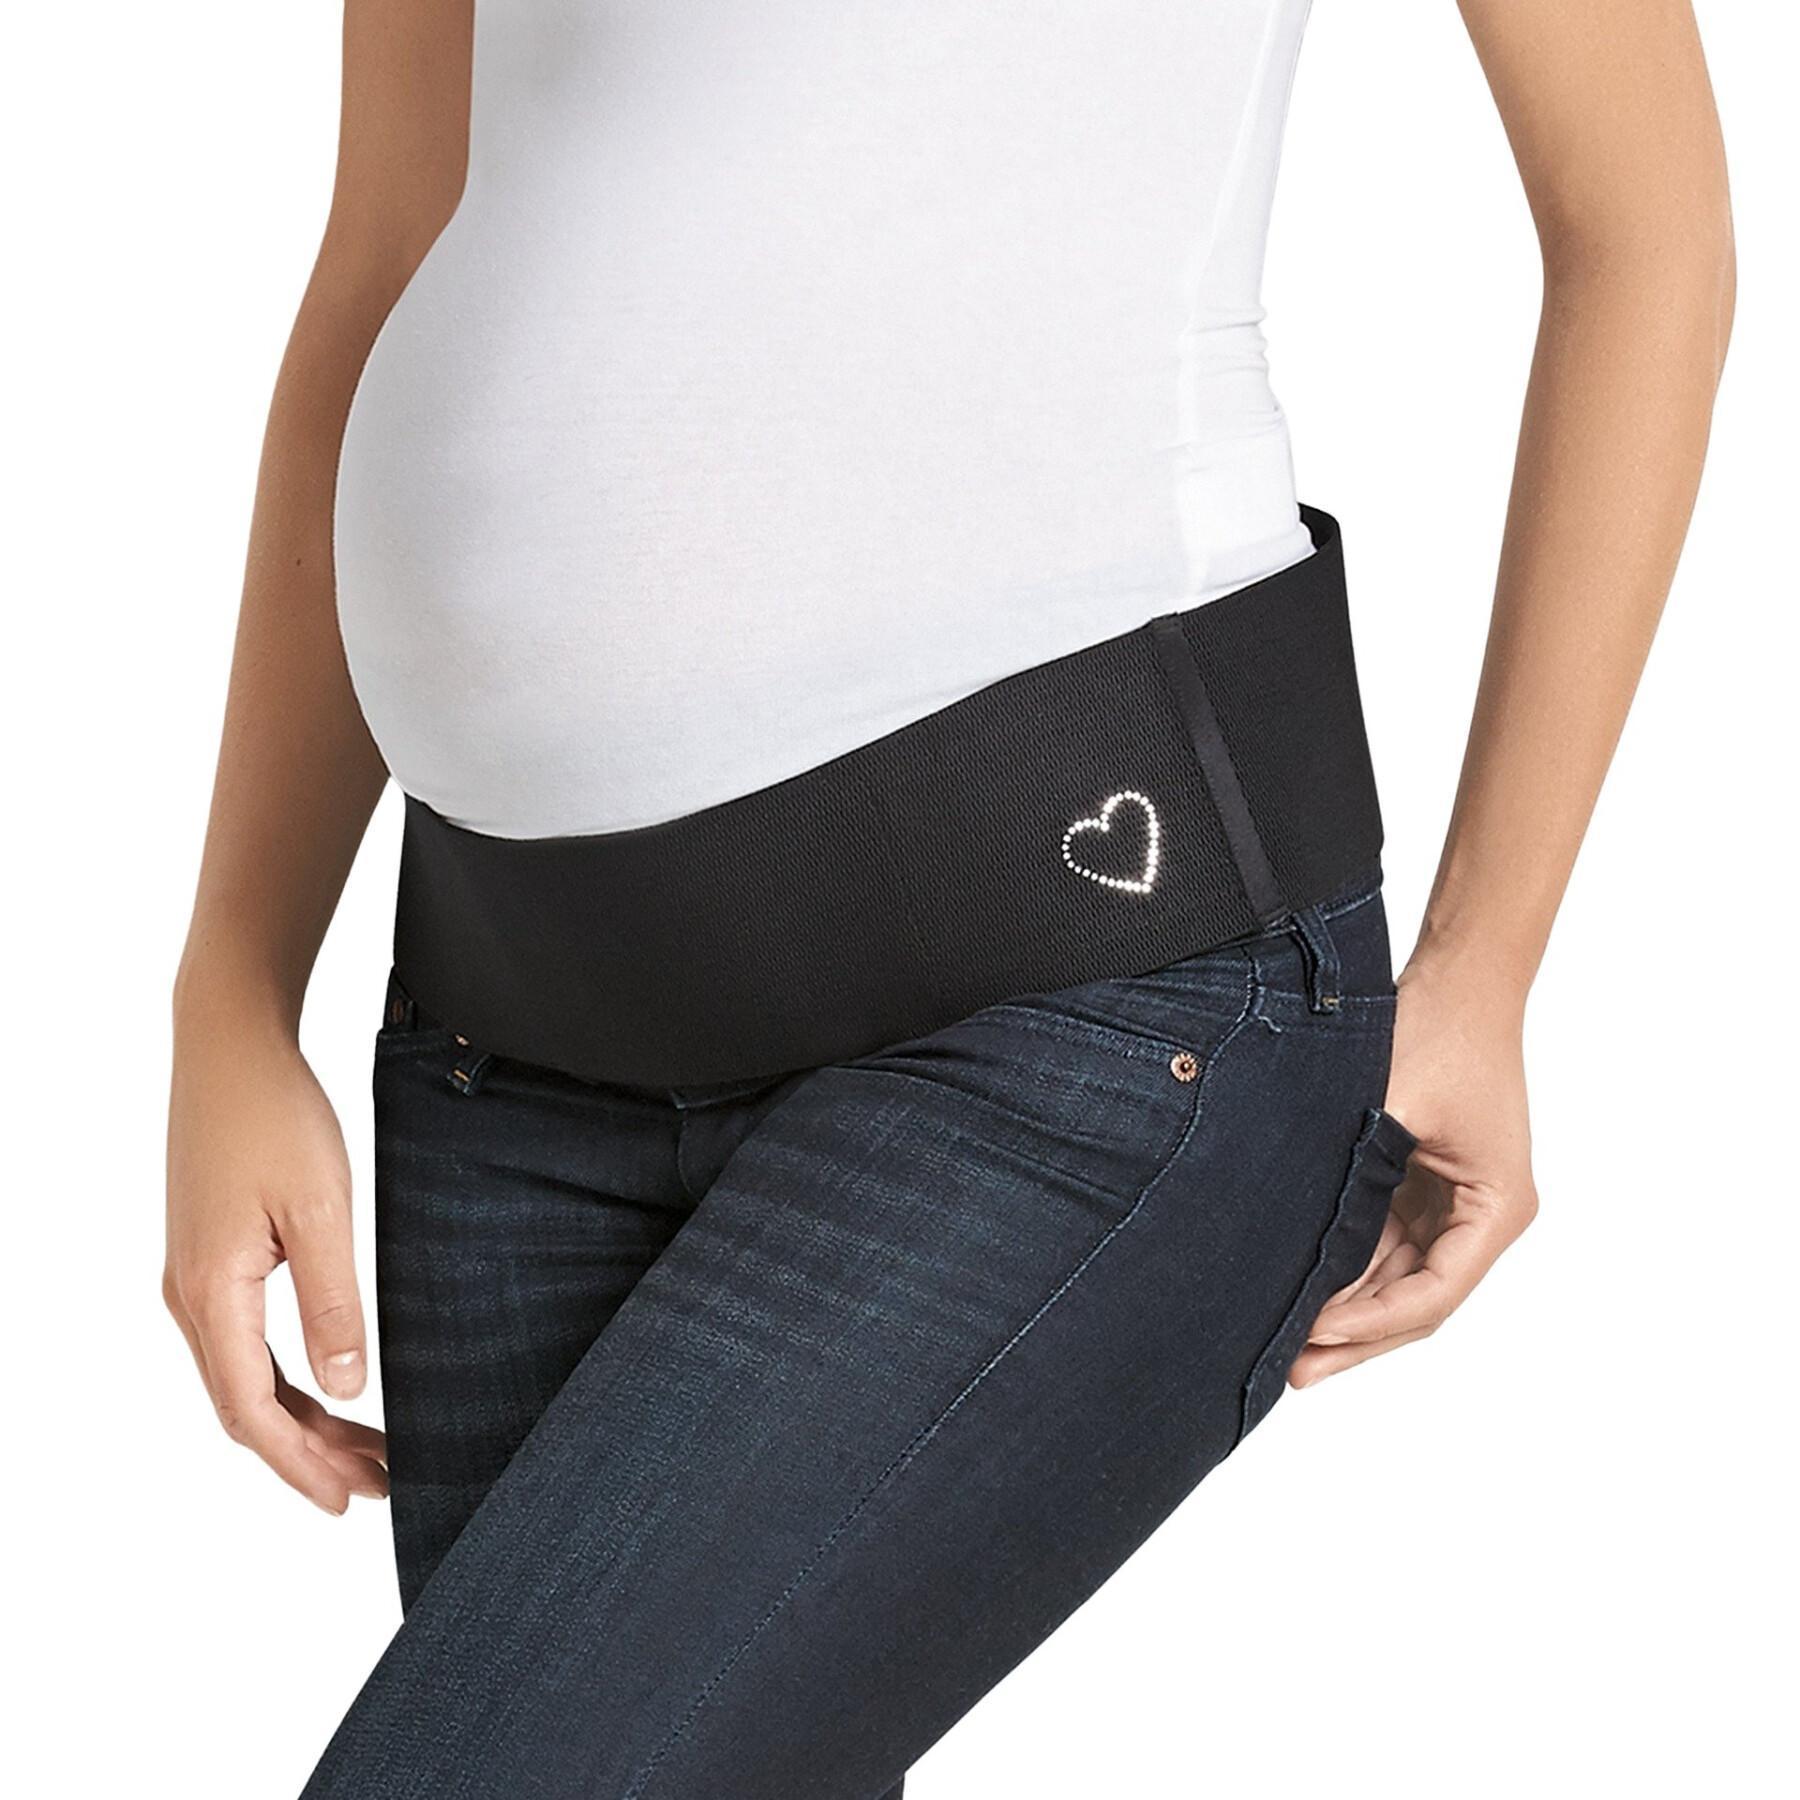 Women's pregnancy belt Anita babySherpa